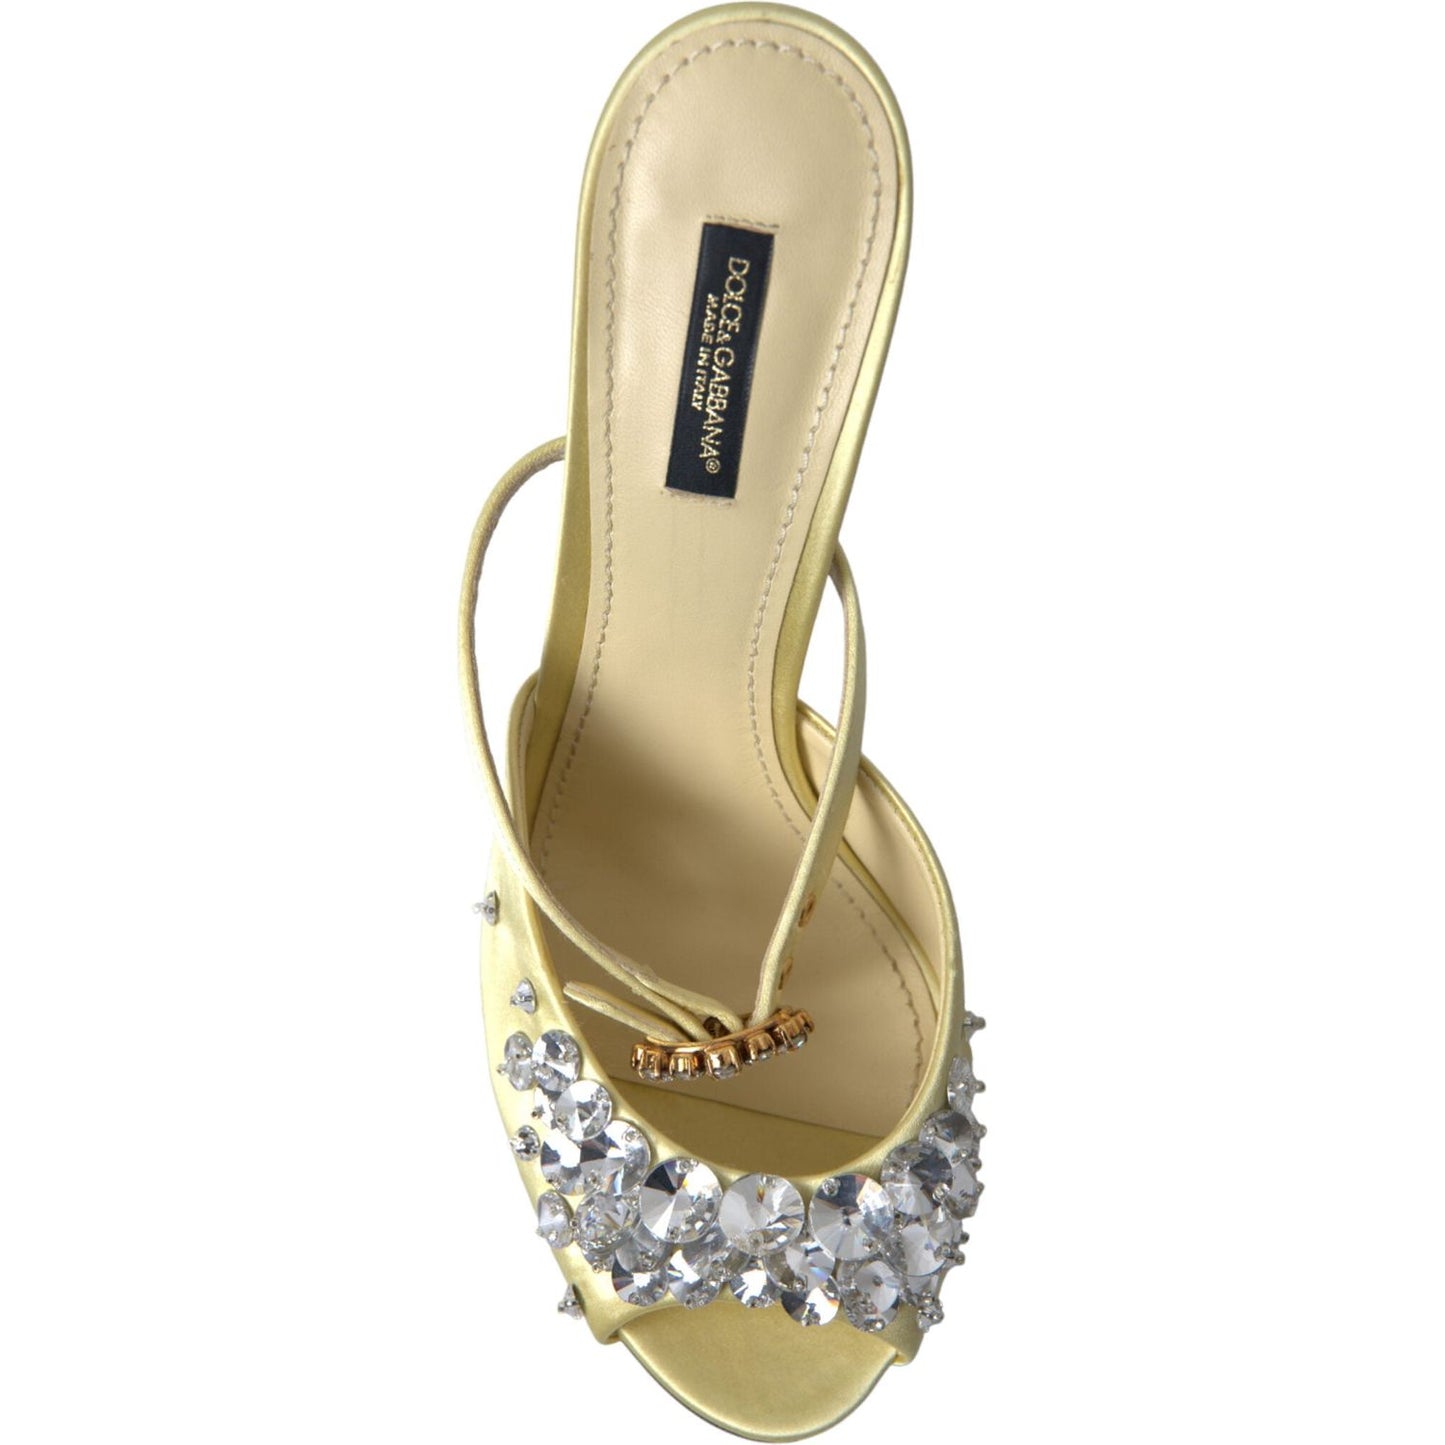 Dolce & Gabbana Crystal Embellished Silk Sandals yellow-satin-crystal-mary-janes-sandals 465A9702-bg-scaled-34df2665-f92.jpg